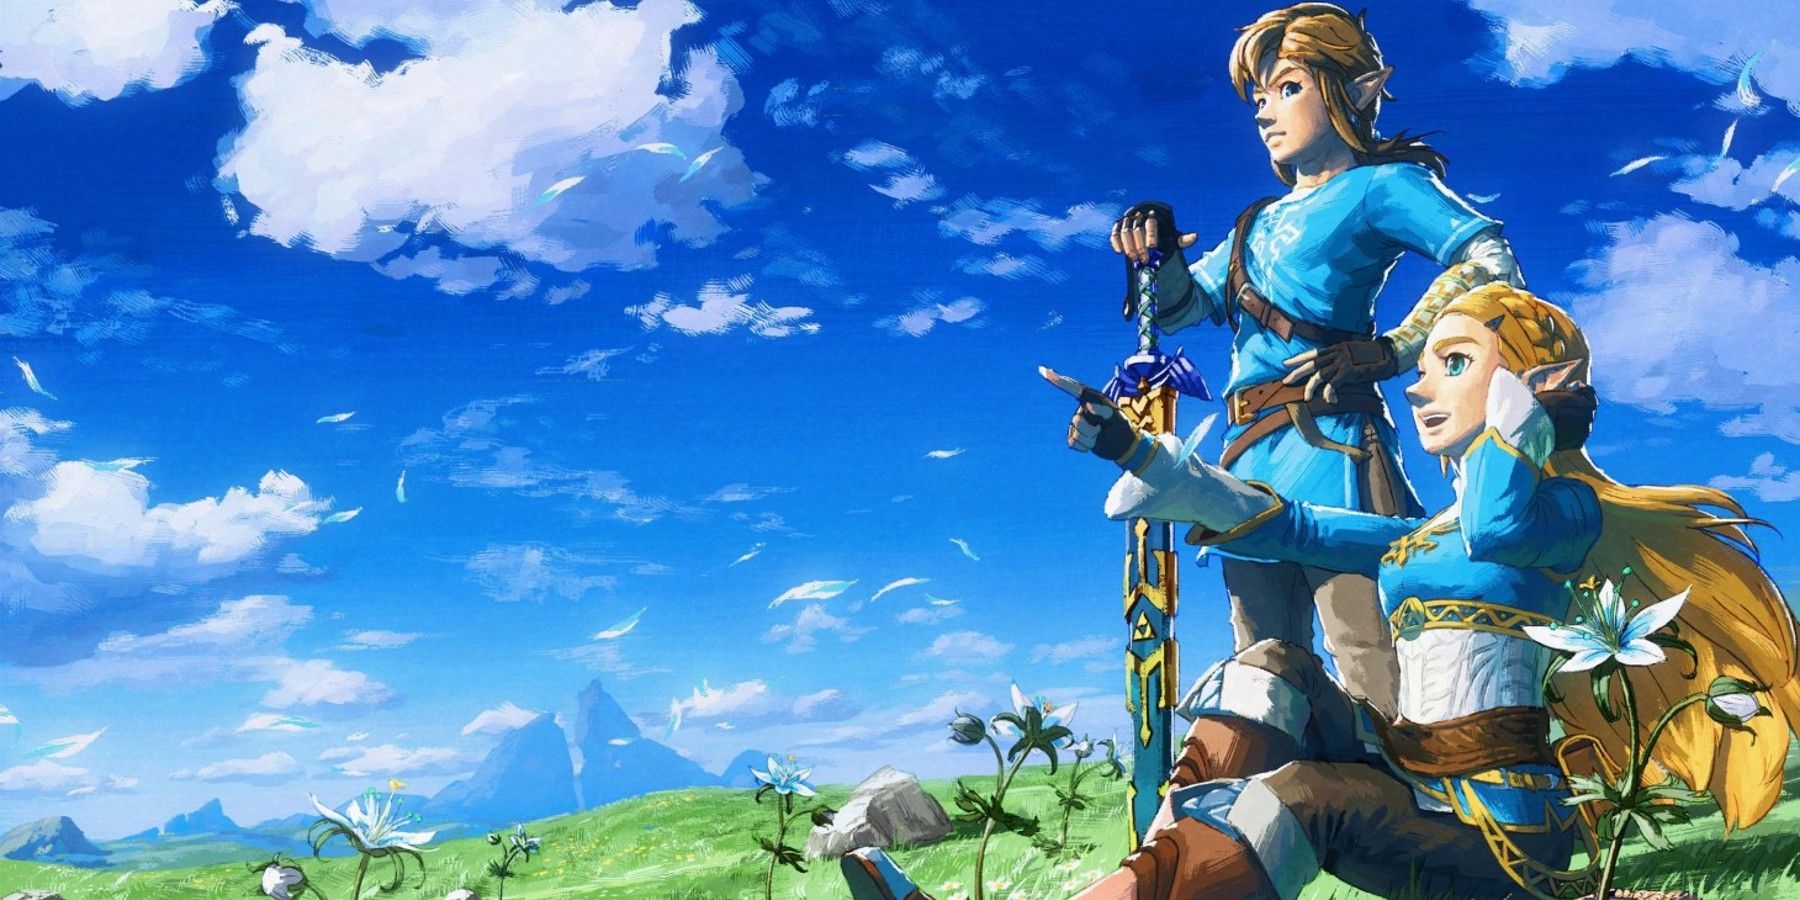 Zelda Fan Shows Off Impressive Collection of Games